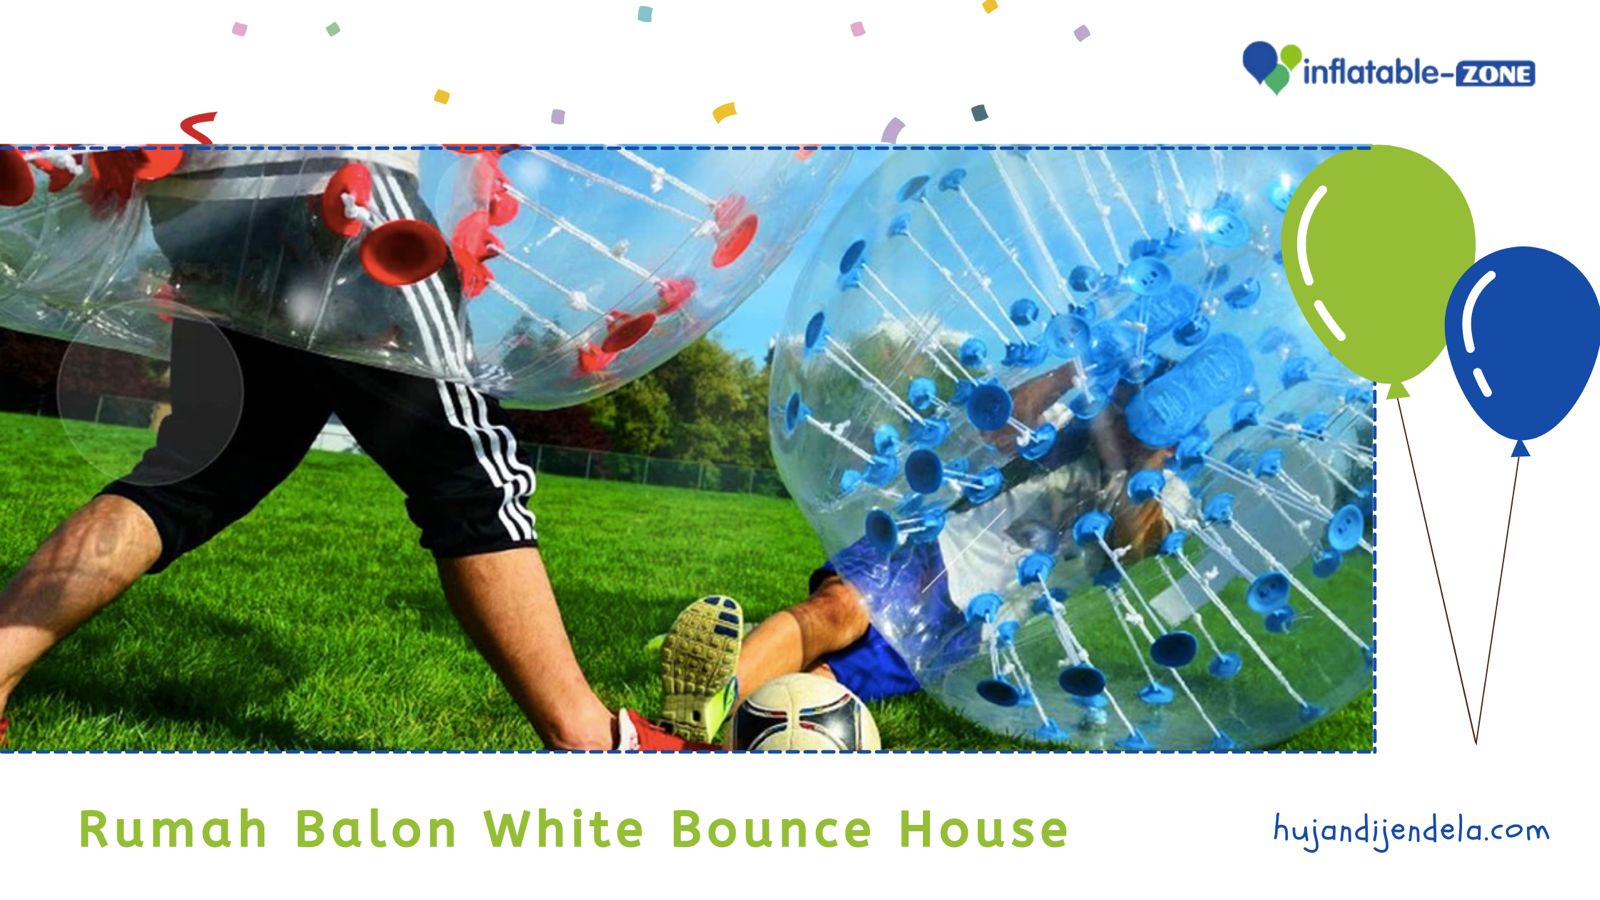 Rumah Balon White Bounce House